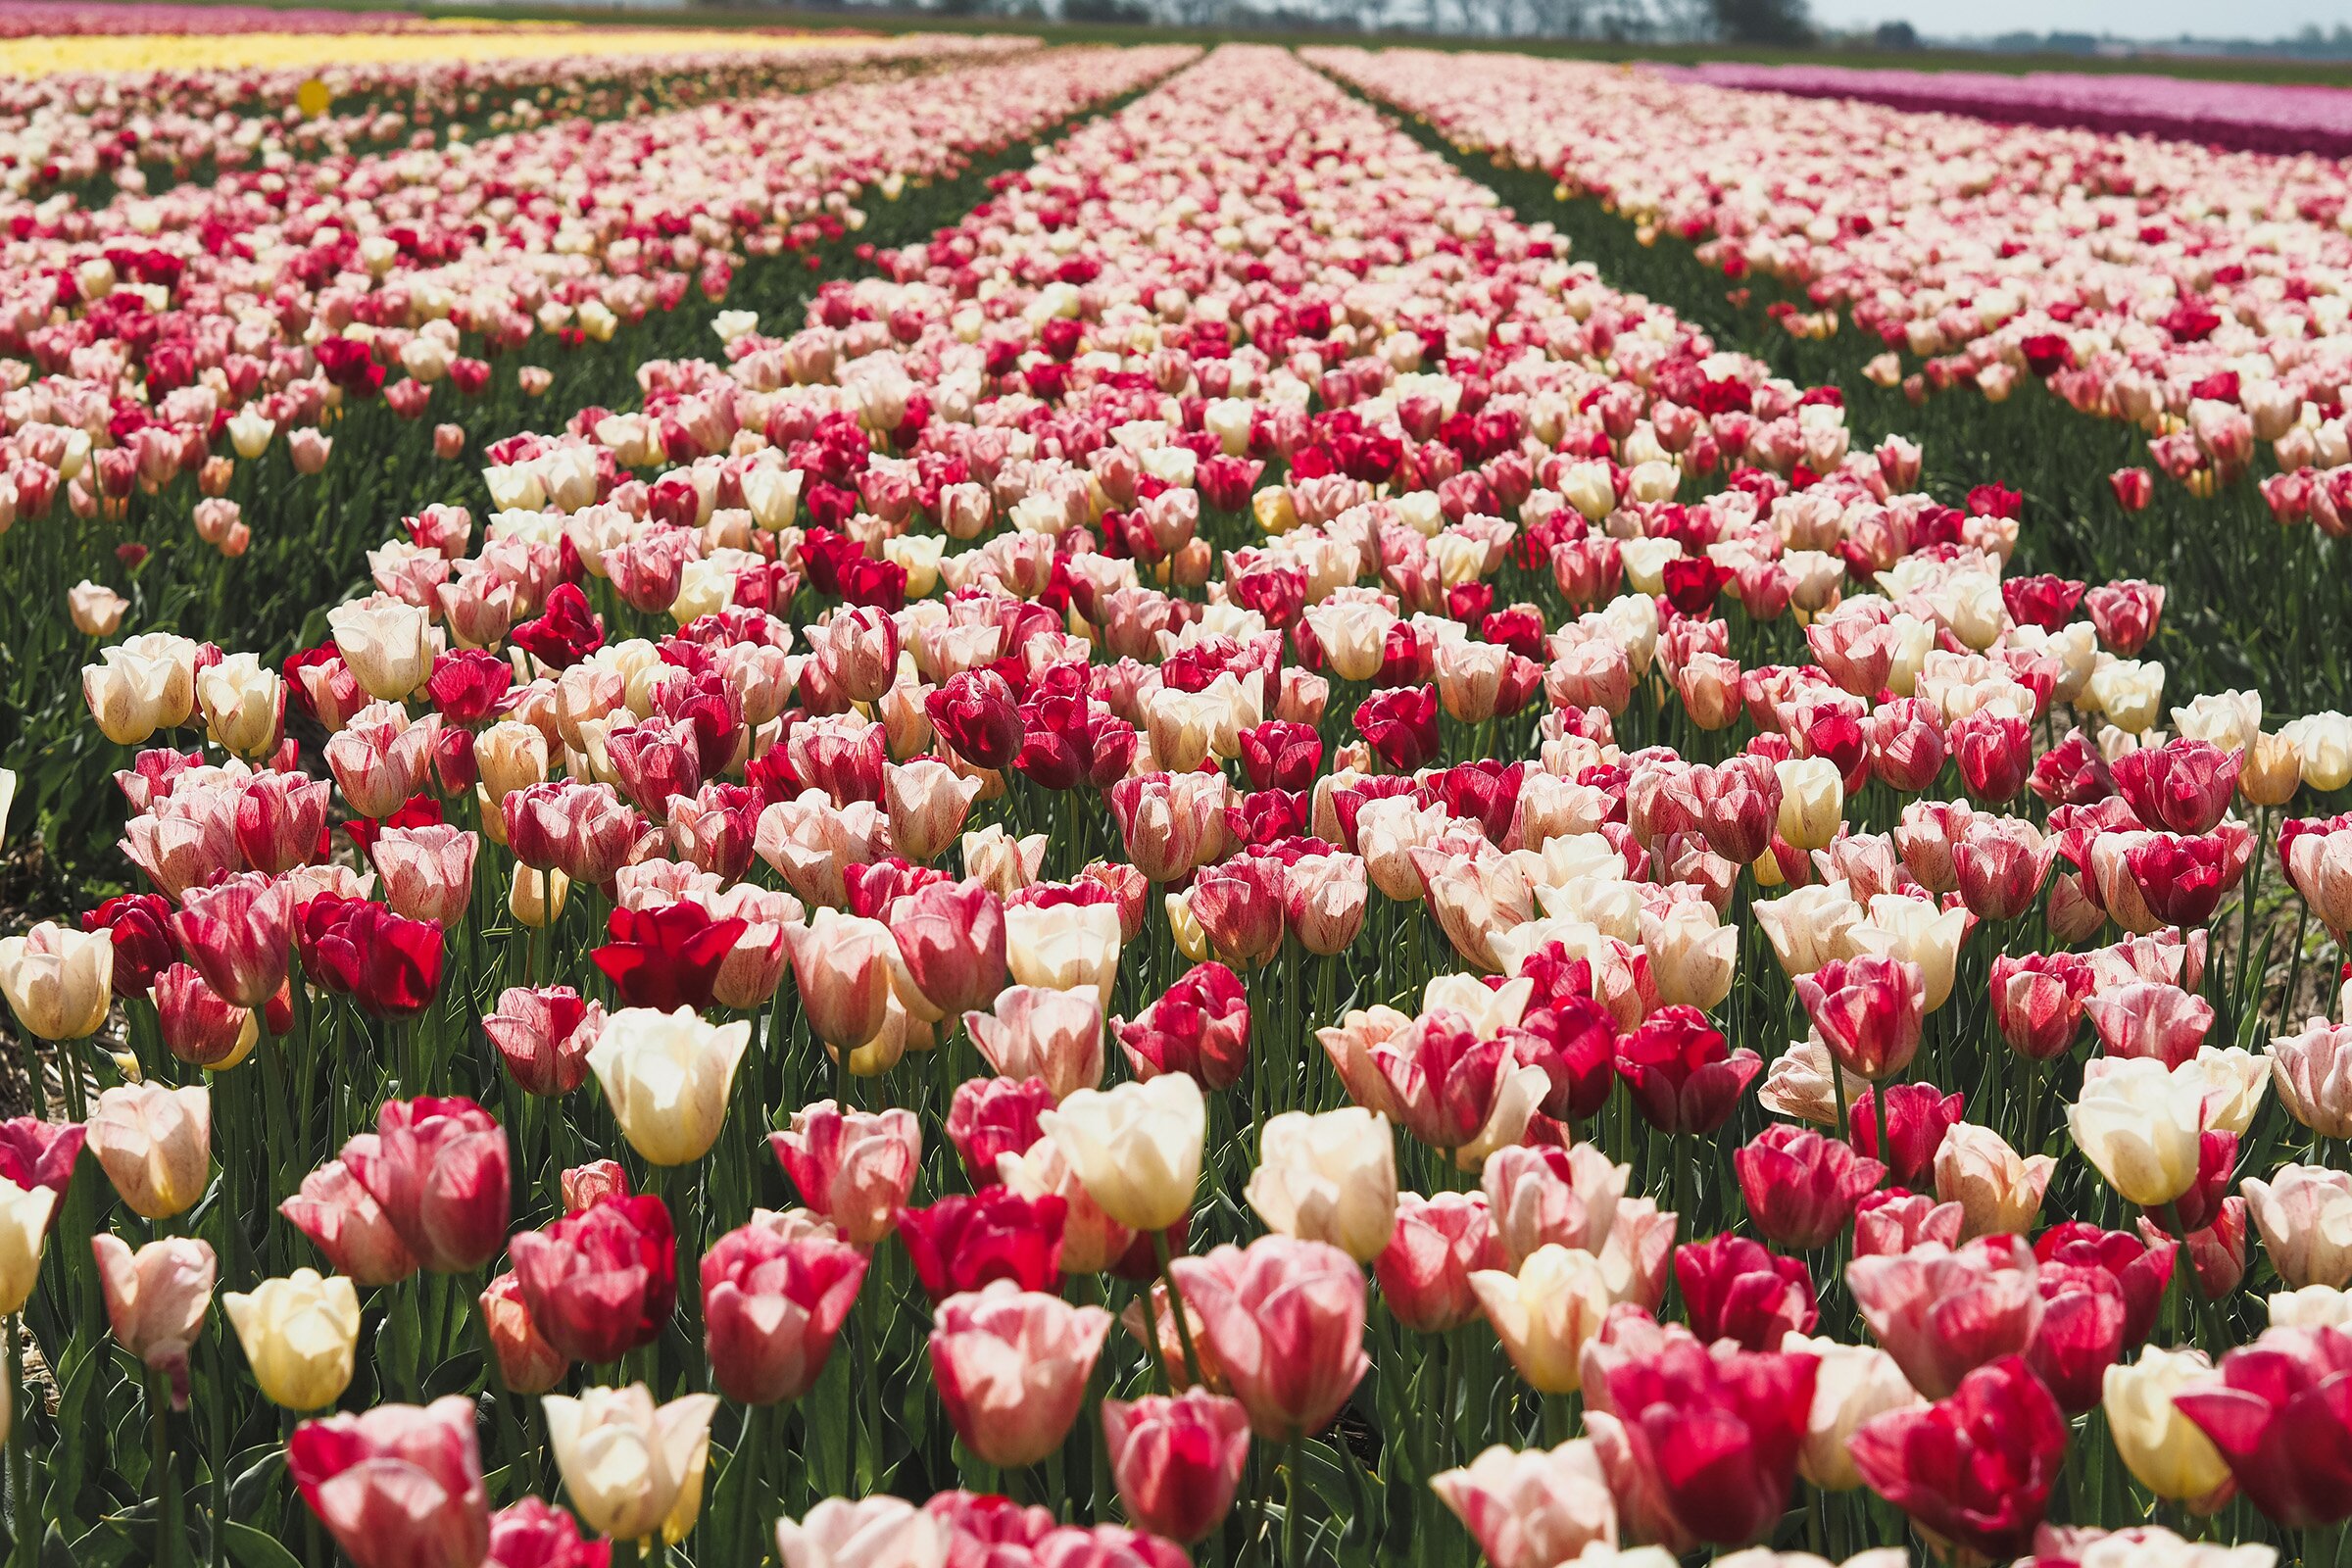 hd tulip fields amsterdam